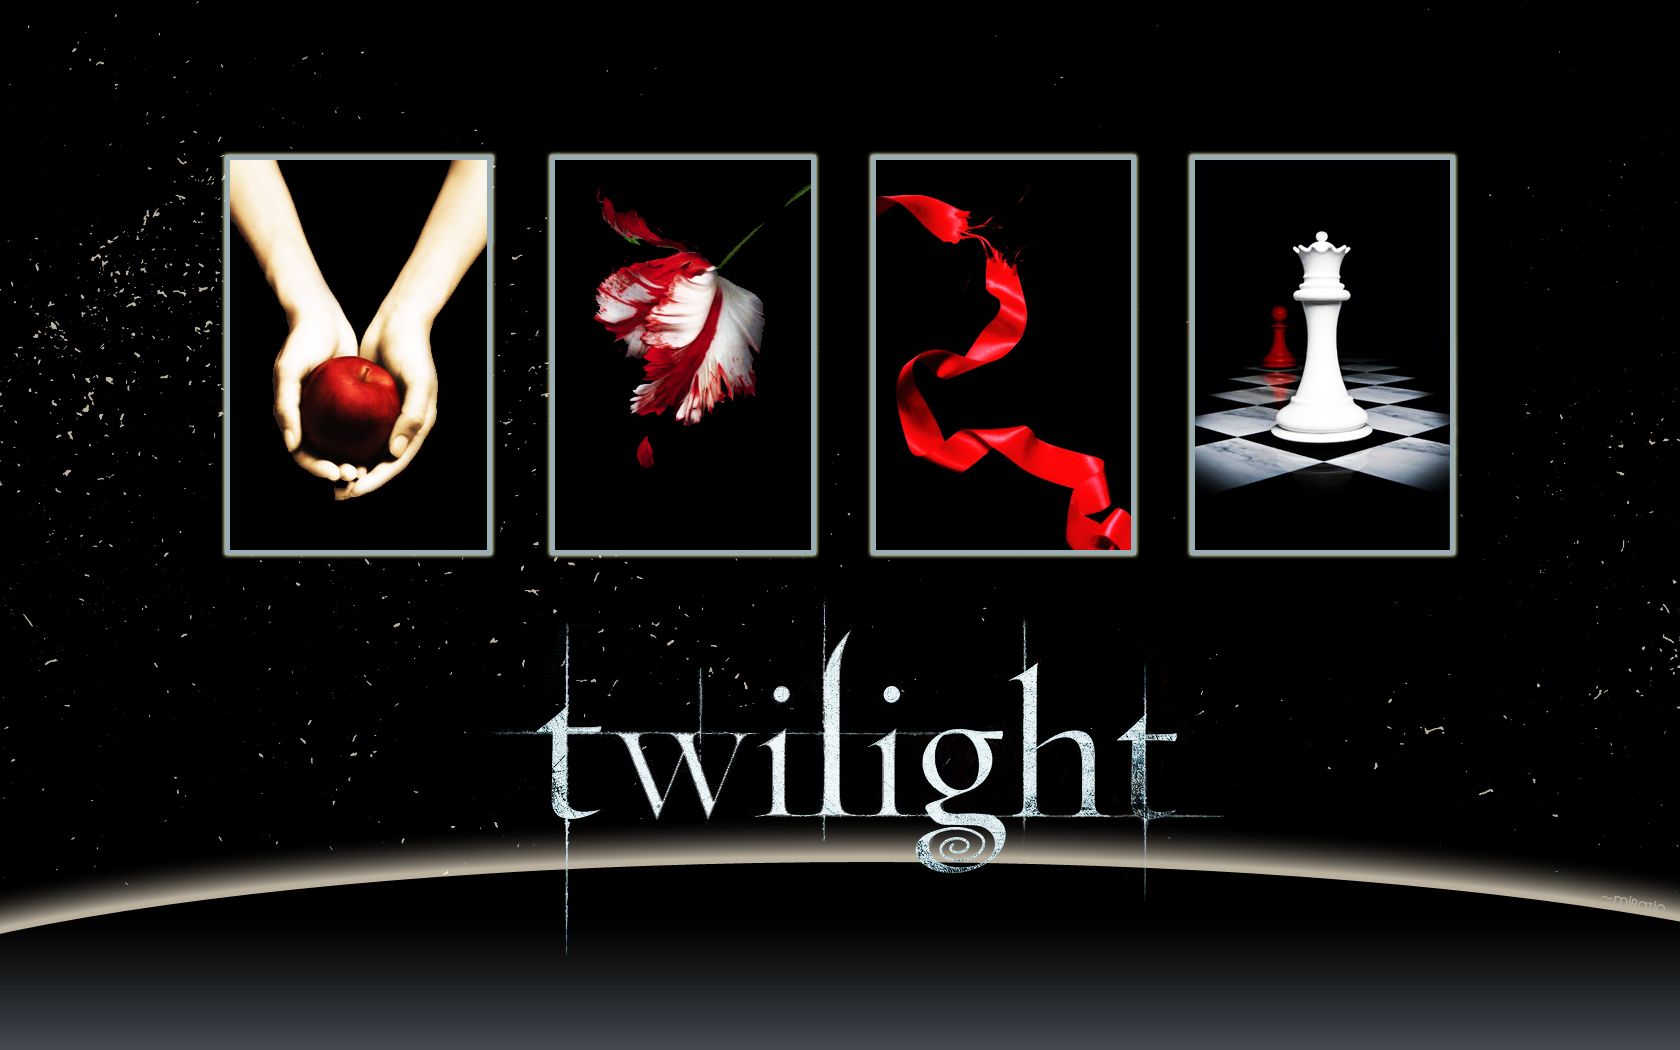 Twilight Saga: Books Wallpaper by miratio on DeviantArt